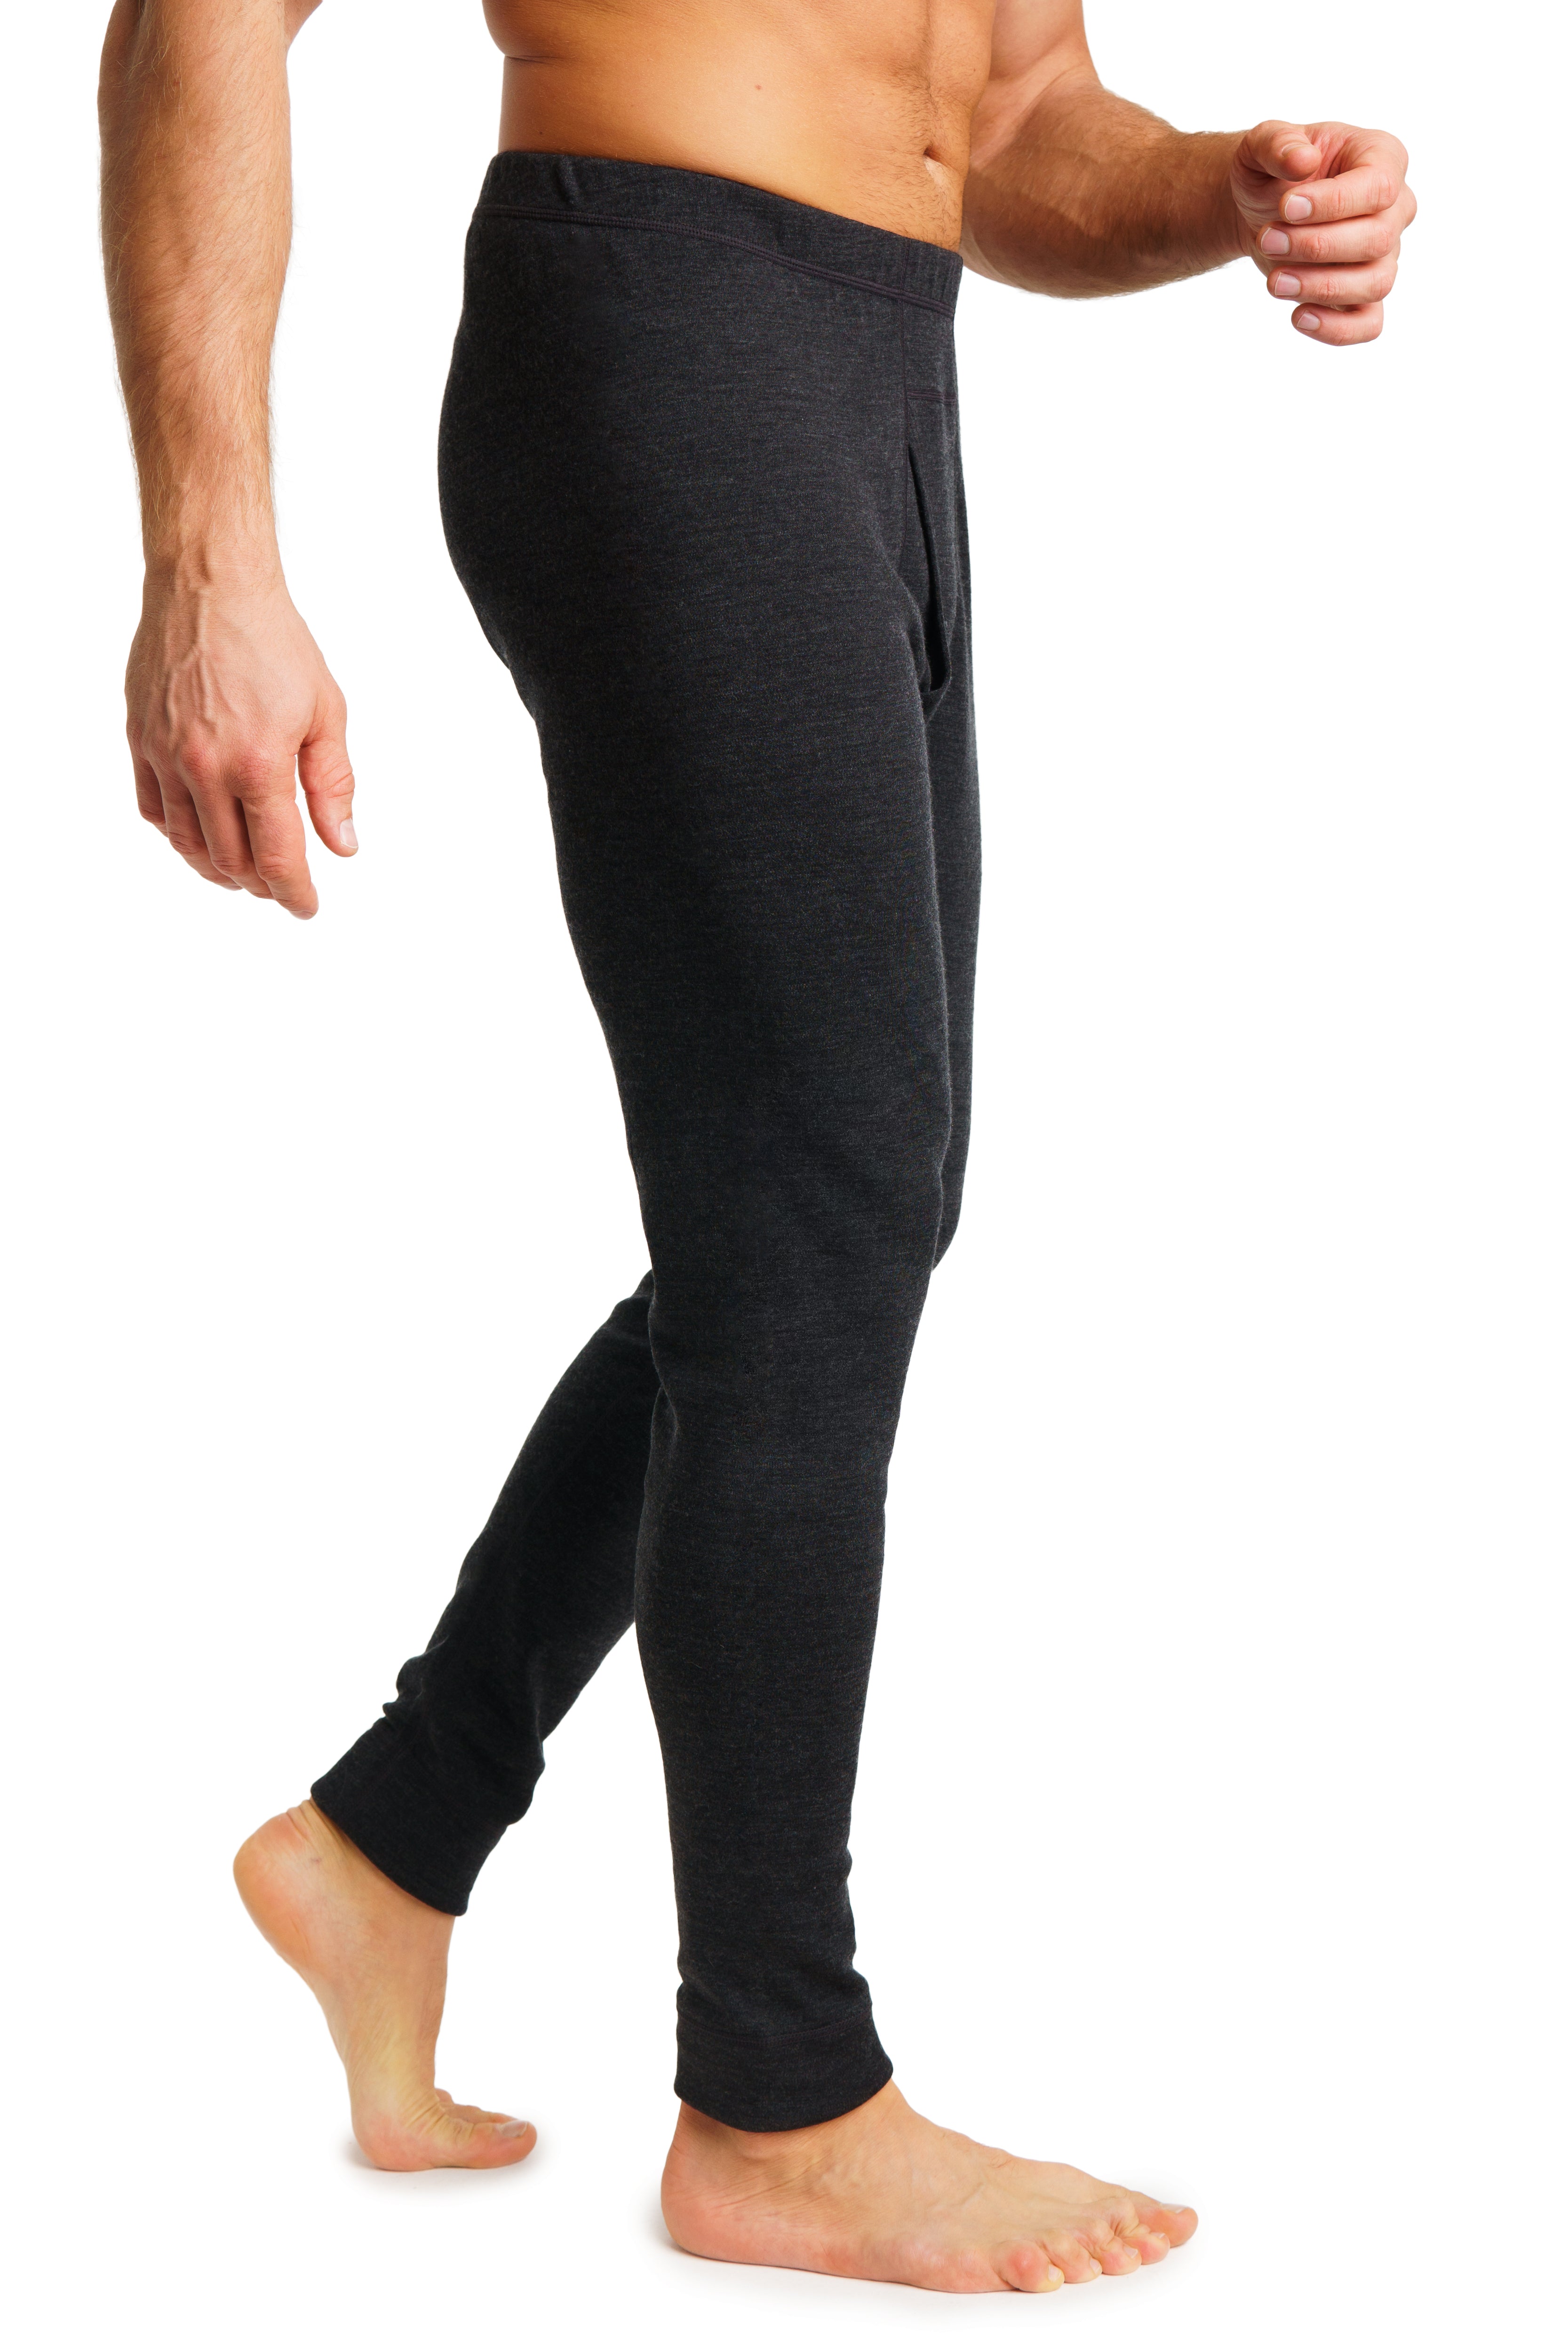 Merino Wool Pants - MidweightBase Layer, Bottom, Underwear, Thermal